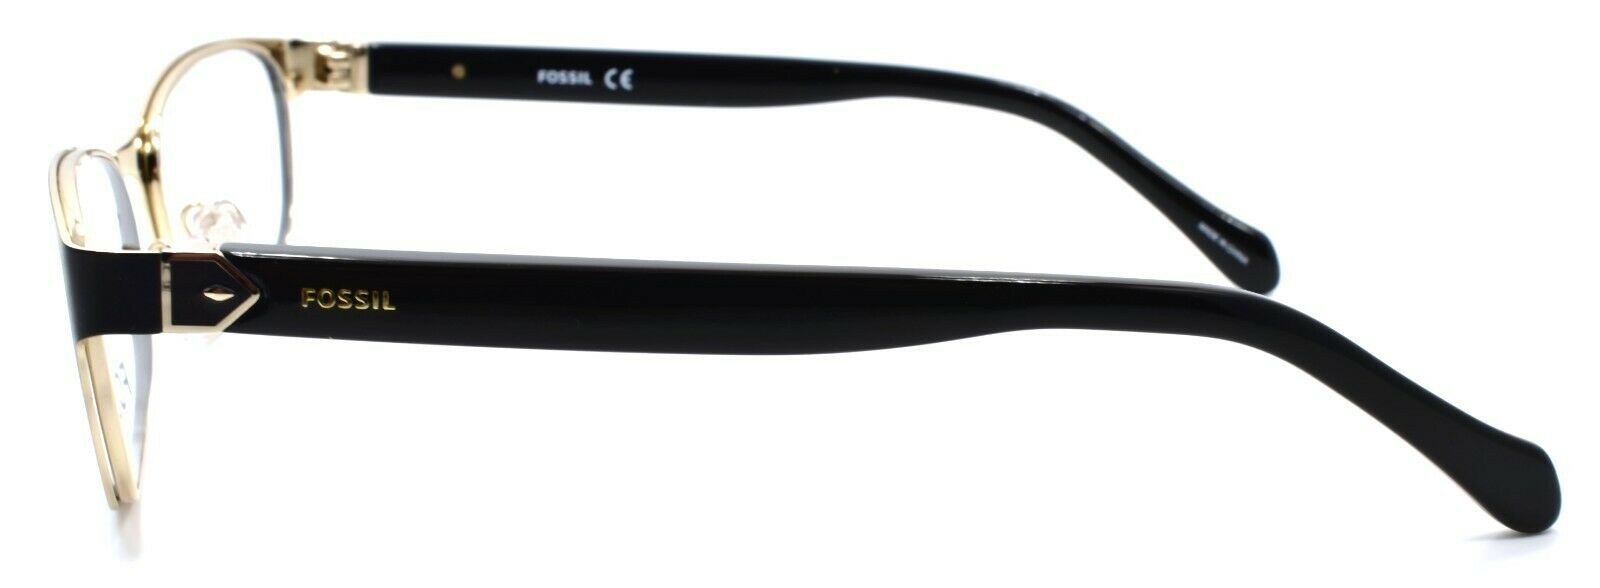 3-Fossil FOS 7023 003 Women's Eyeglasses Frames 51-17-140 Matte Black-716736022475-IKSpecs